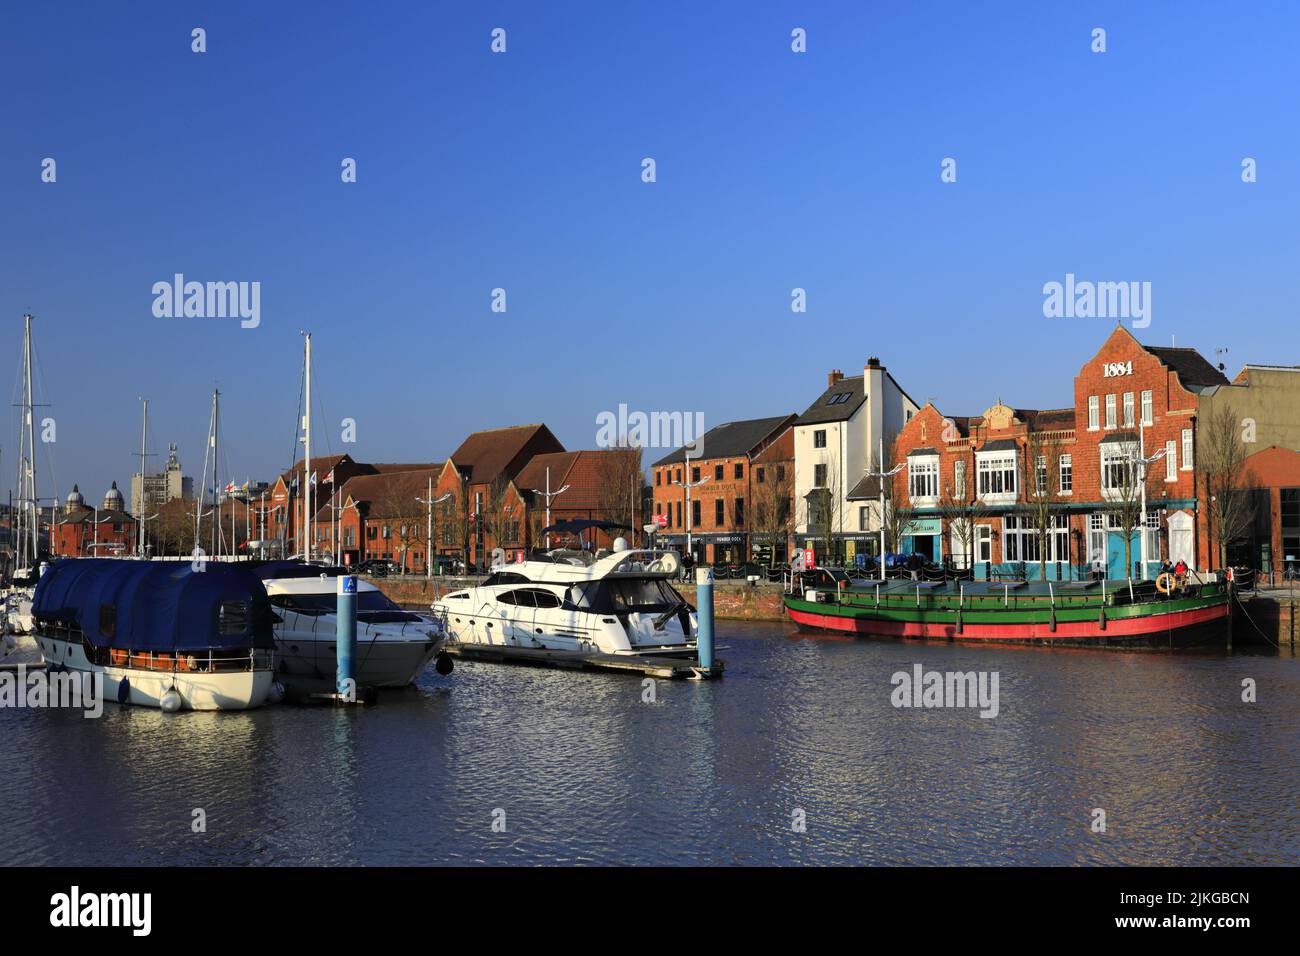 Boats in the Marina, Kingston-upon-Hull, East Riding of Yorkshire, Humberside, England, UK Stock Photo